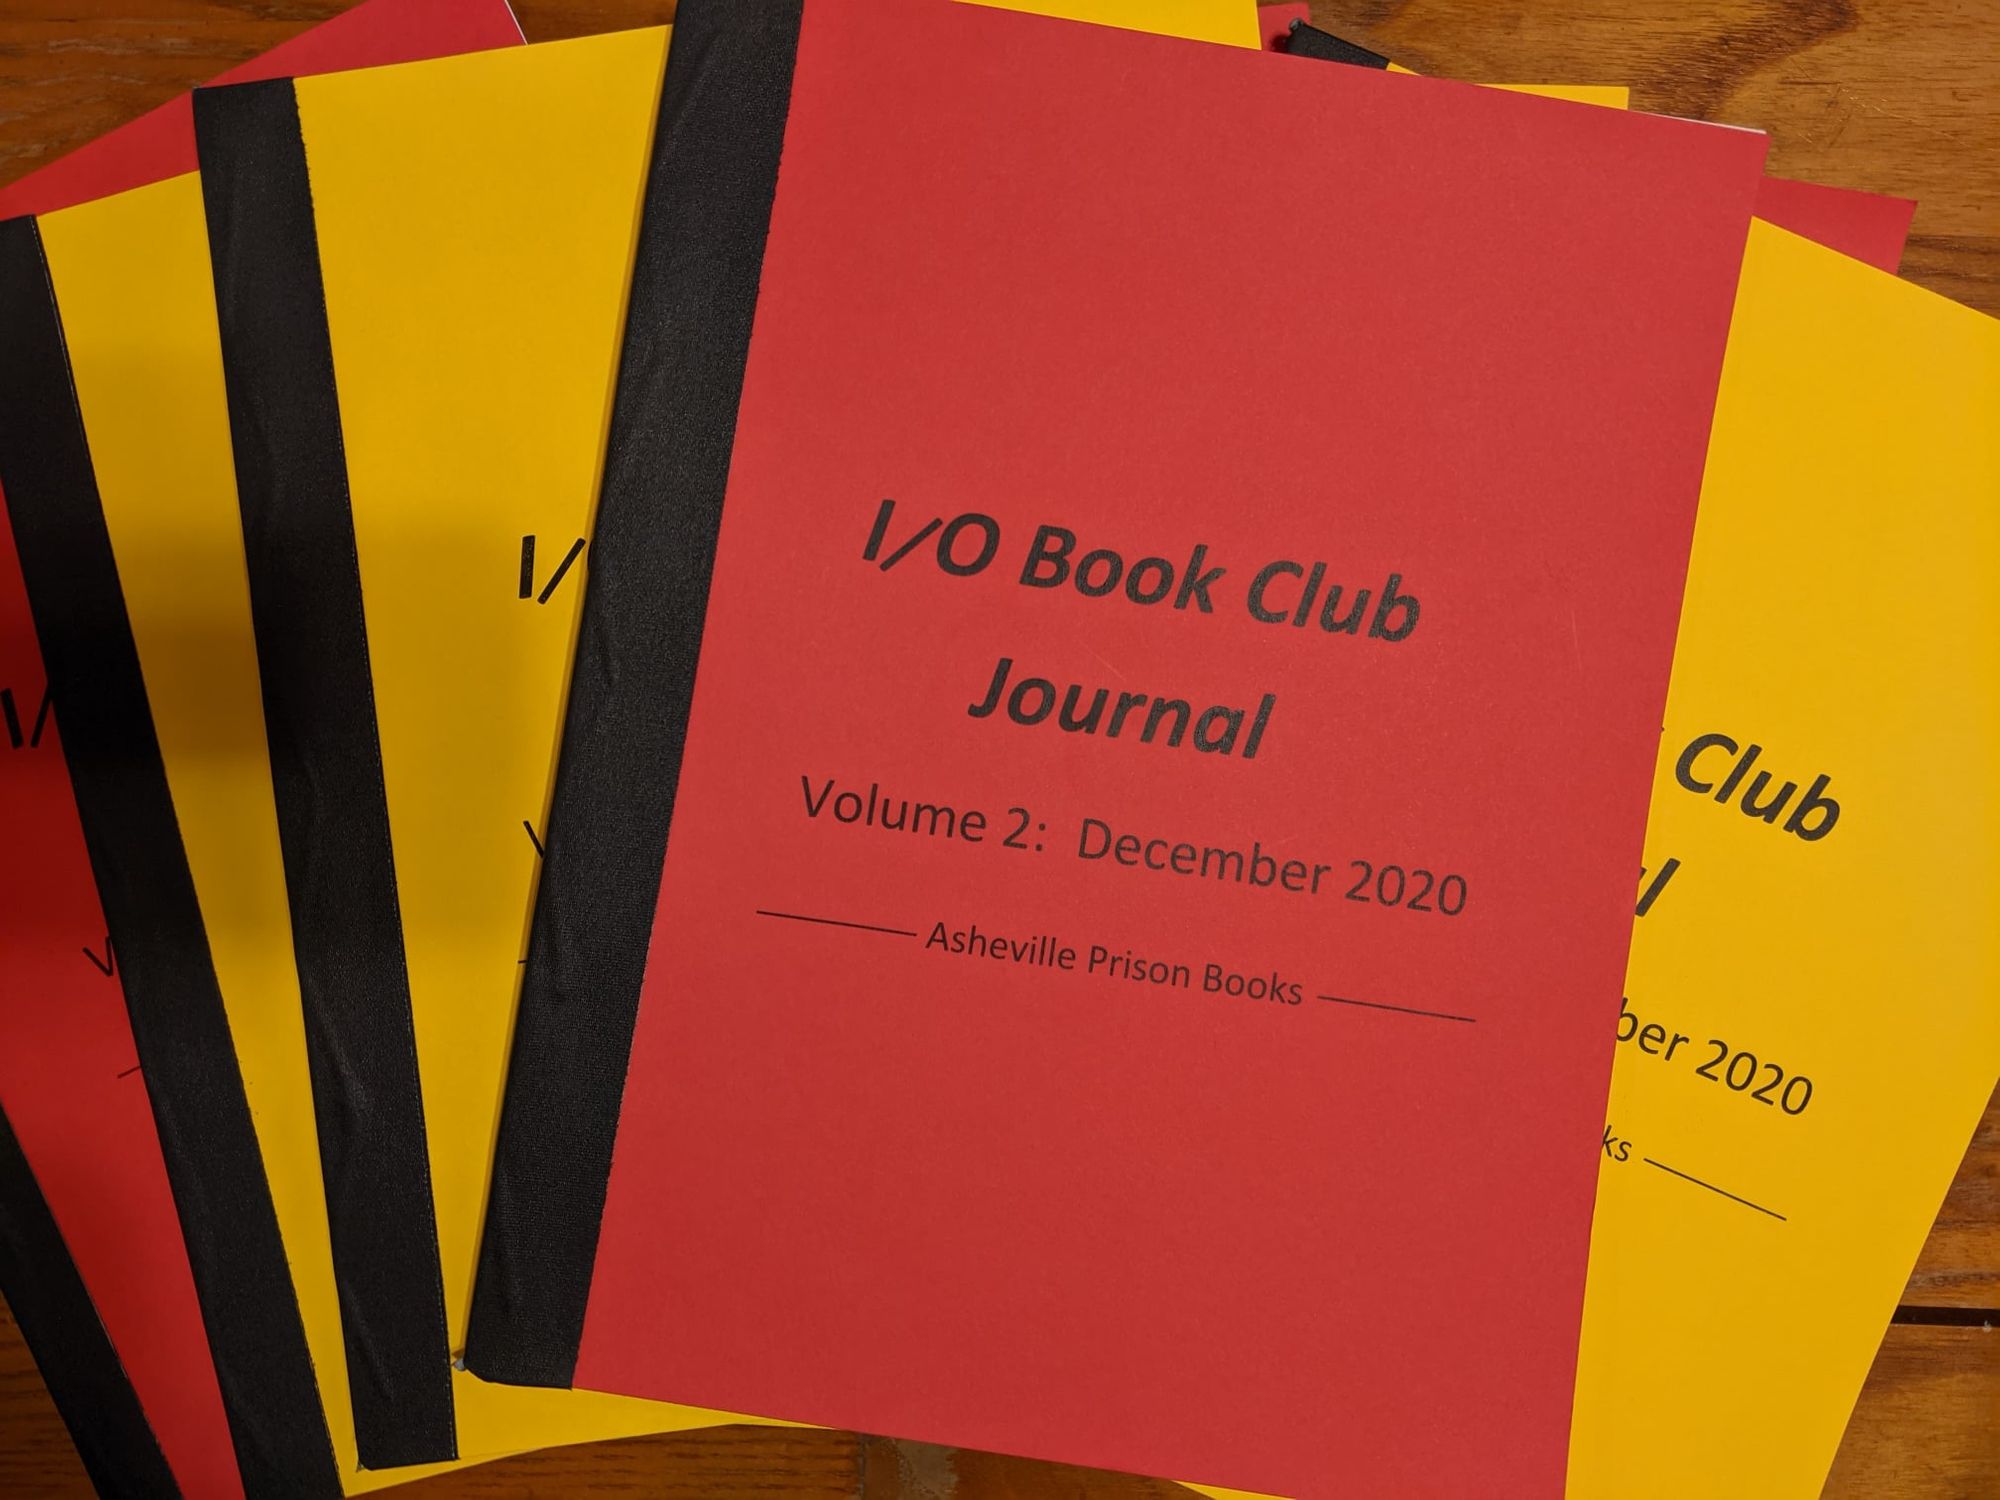 I/O Book Club Volume 2